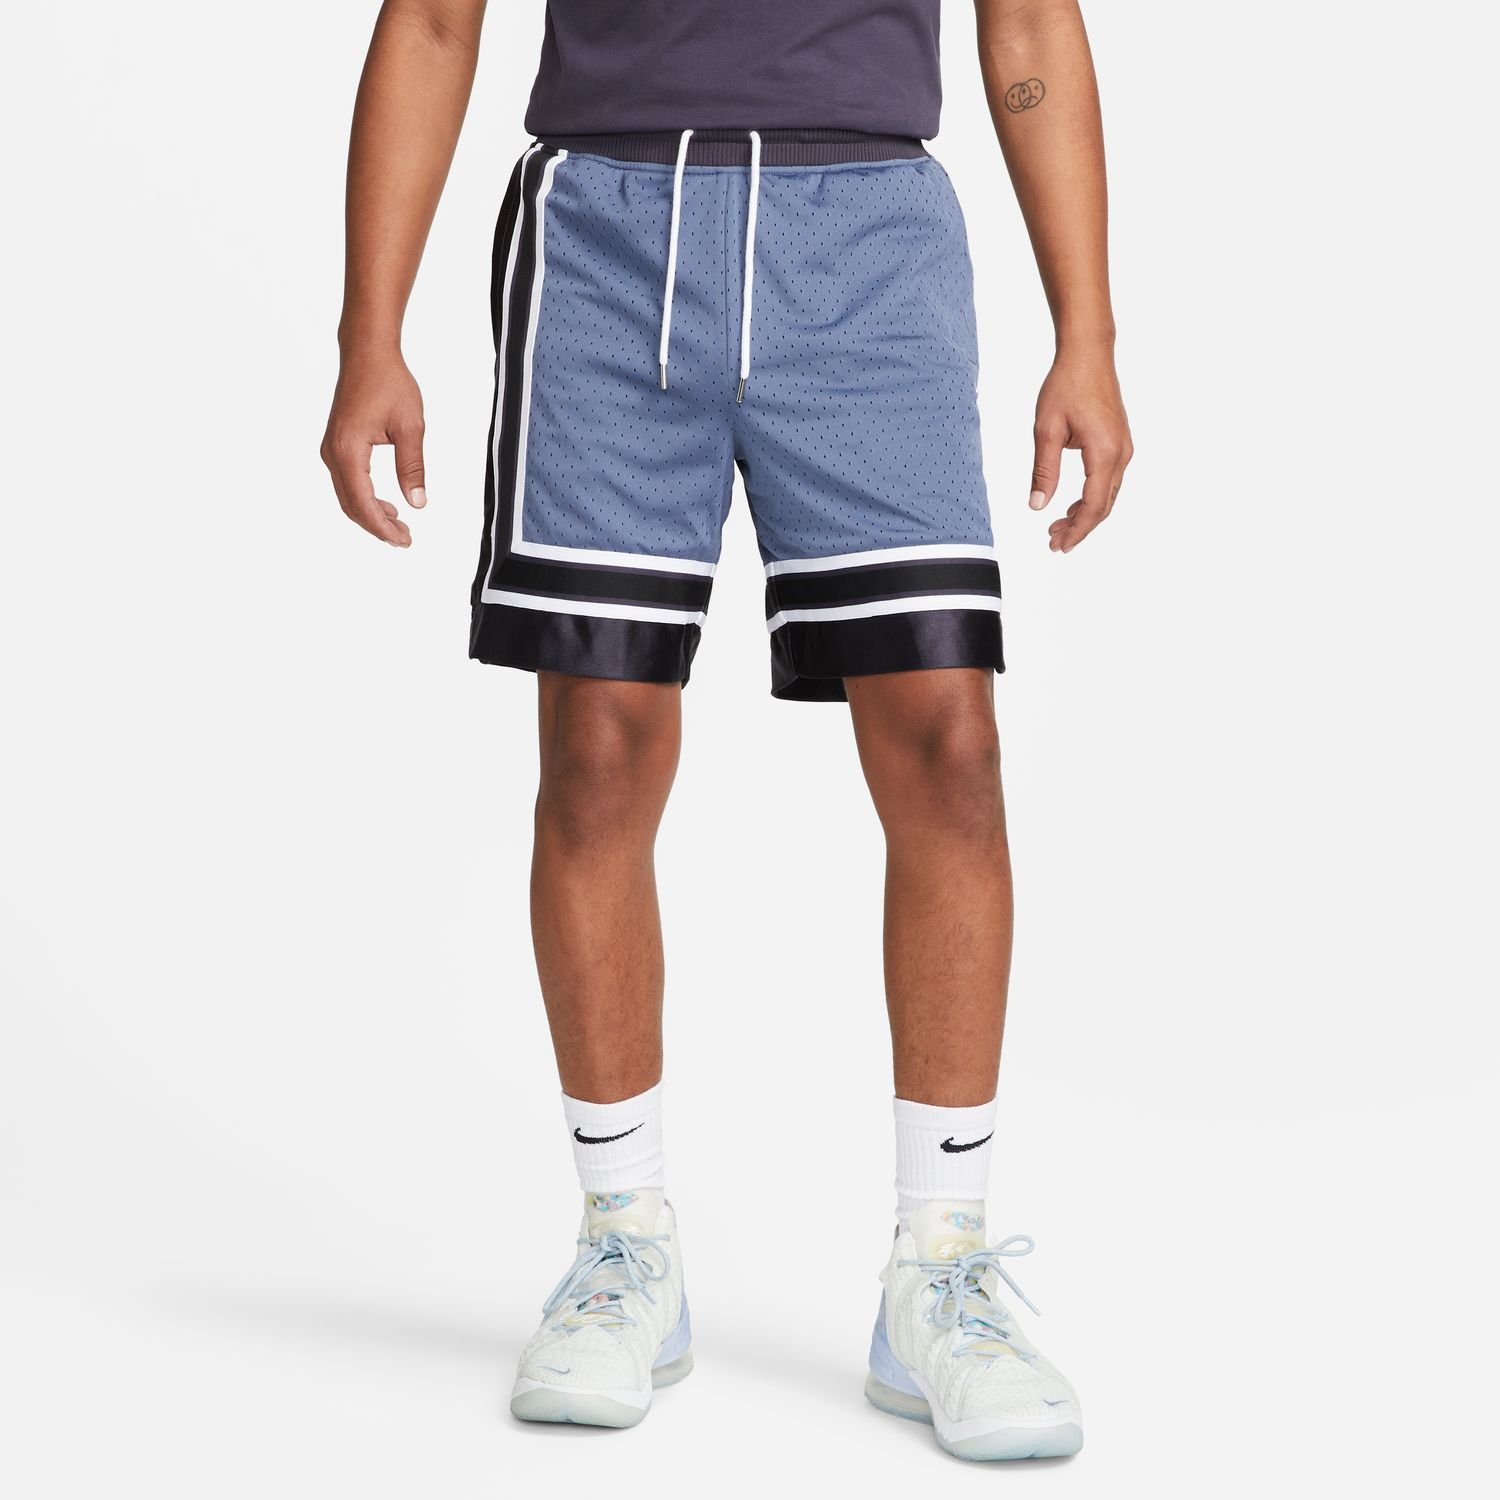 Circa 8" Basketball Shorts